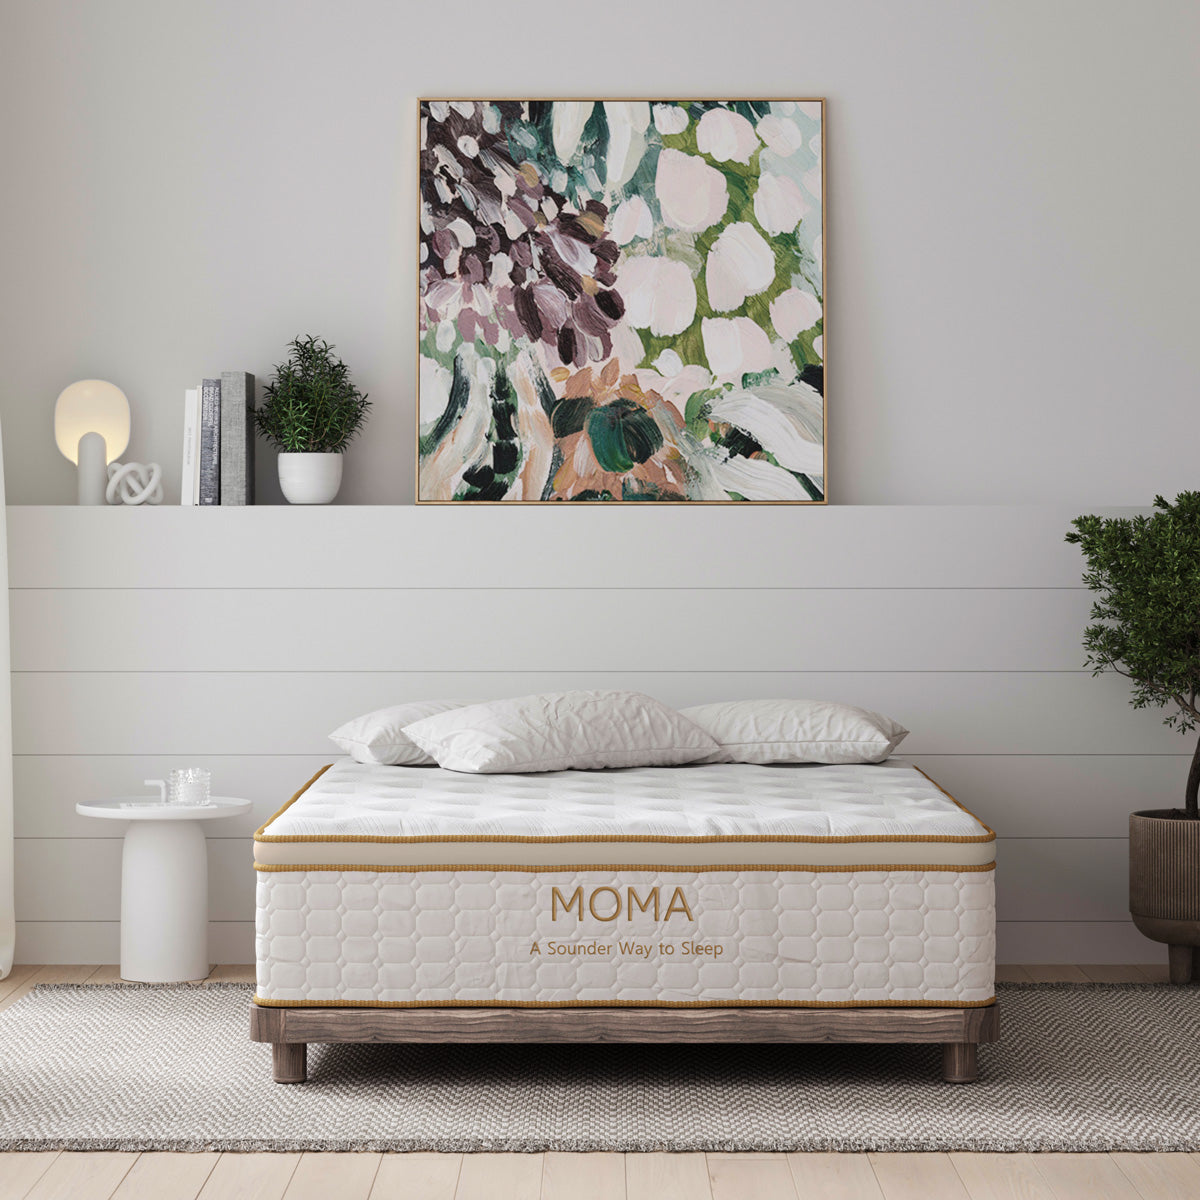 Moma Comfort Hybrid Mattress (Queen Size)